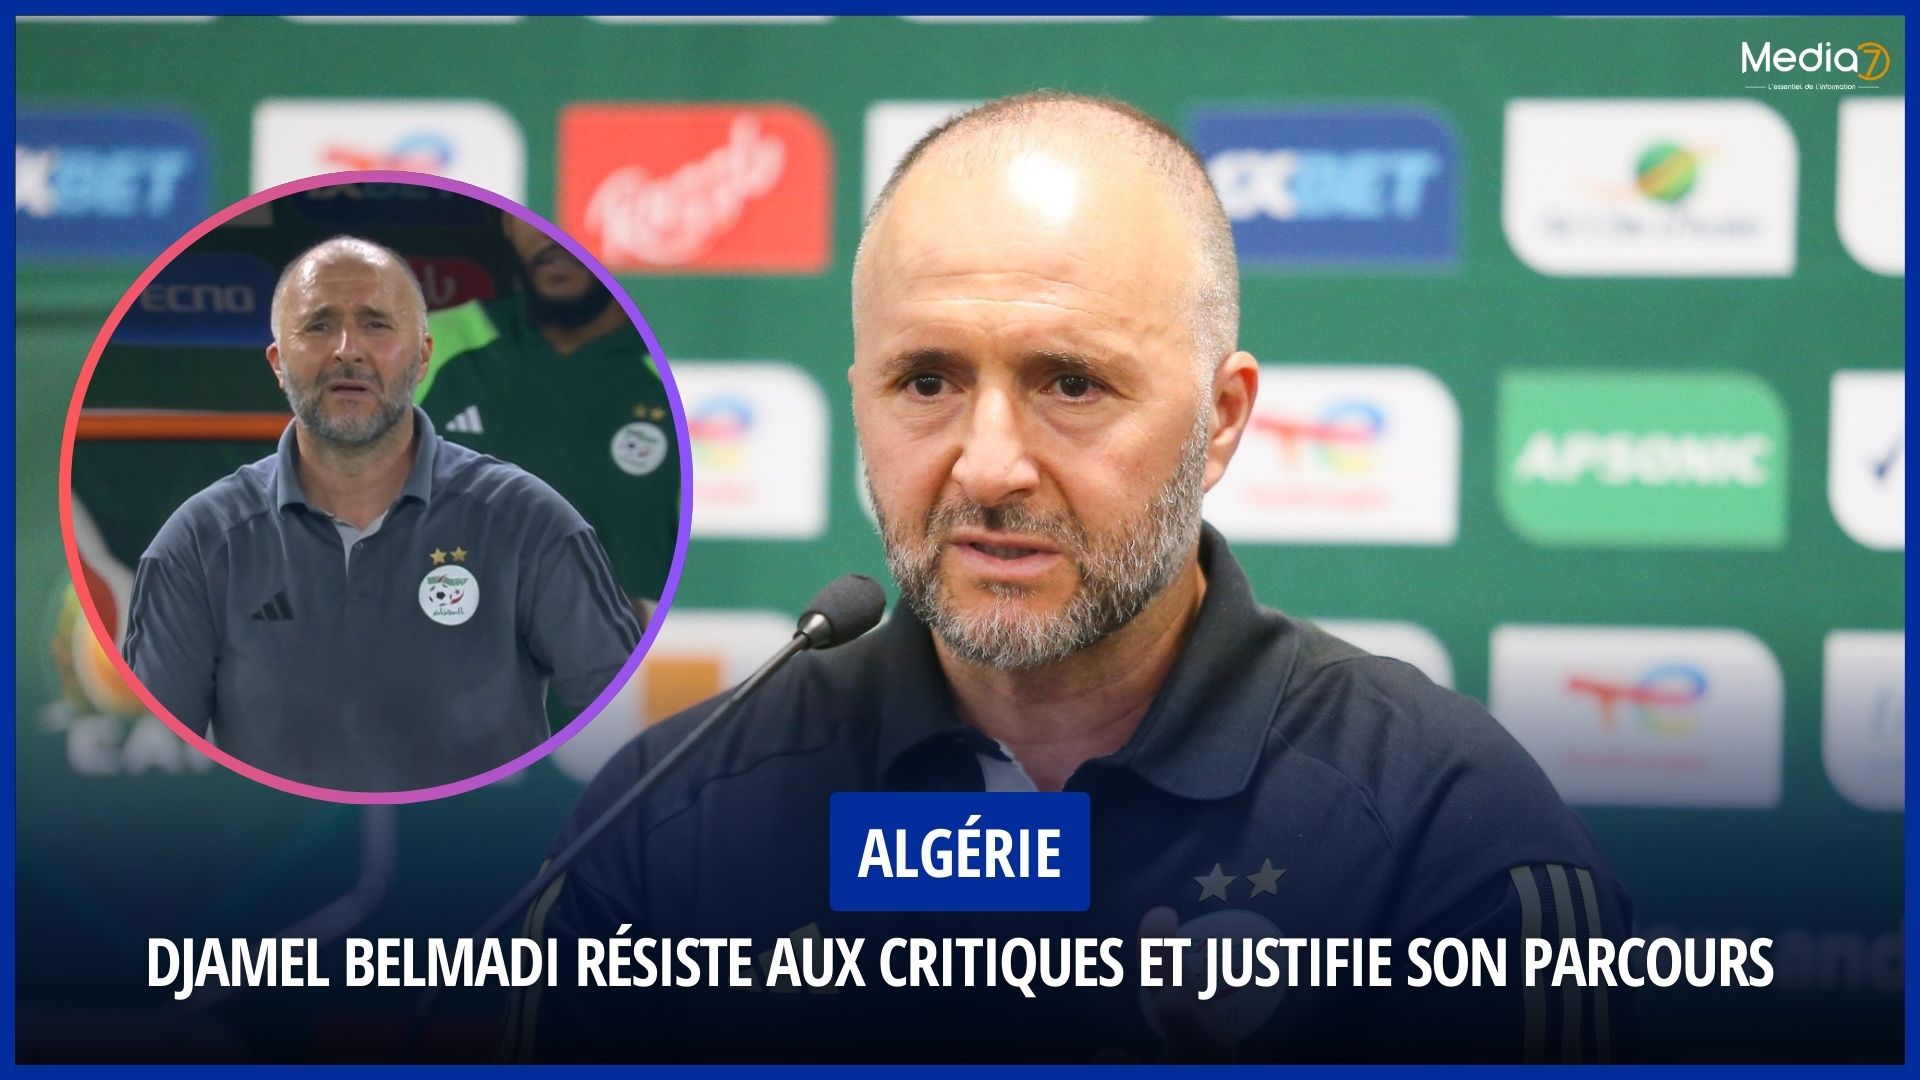 Algeria: Djamel Belmadi Resists criticism and Justifies his career - Media7